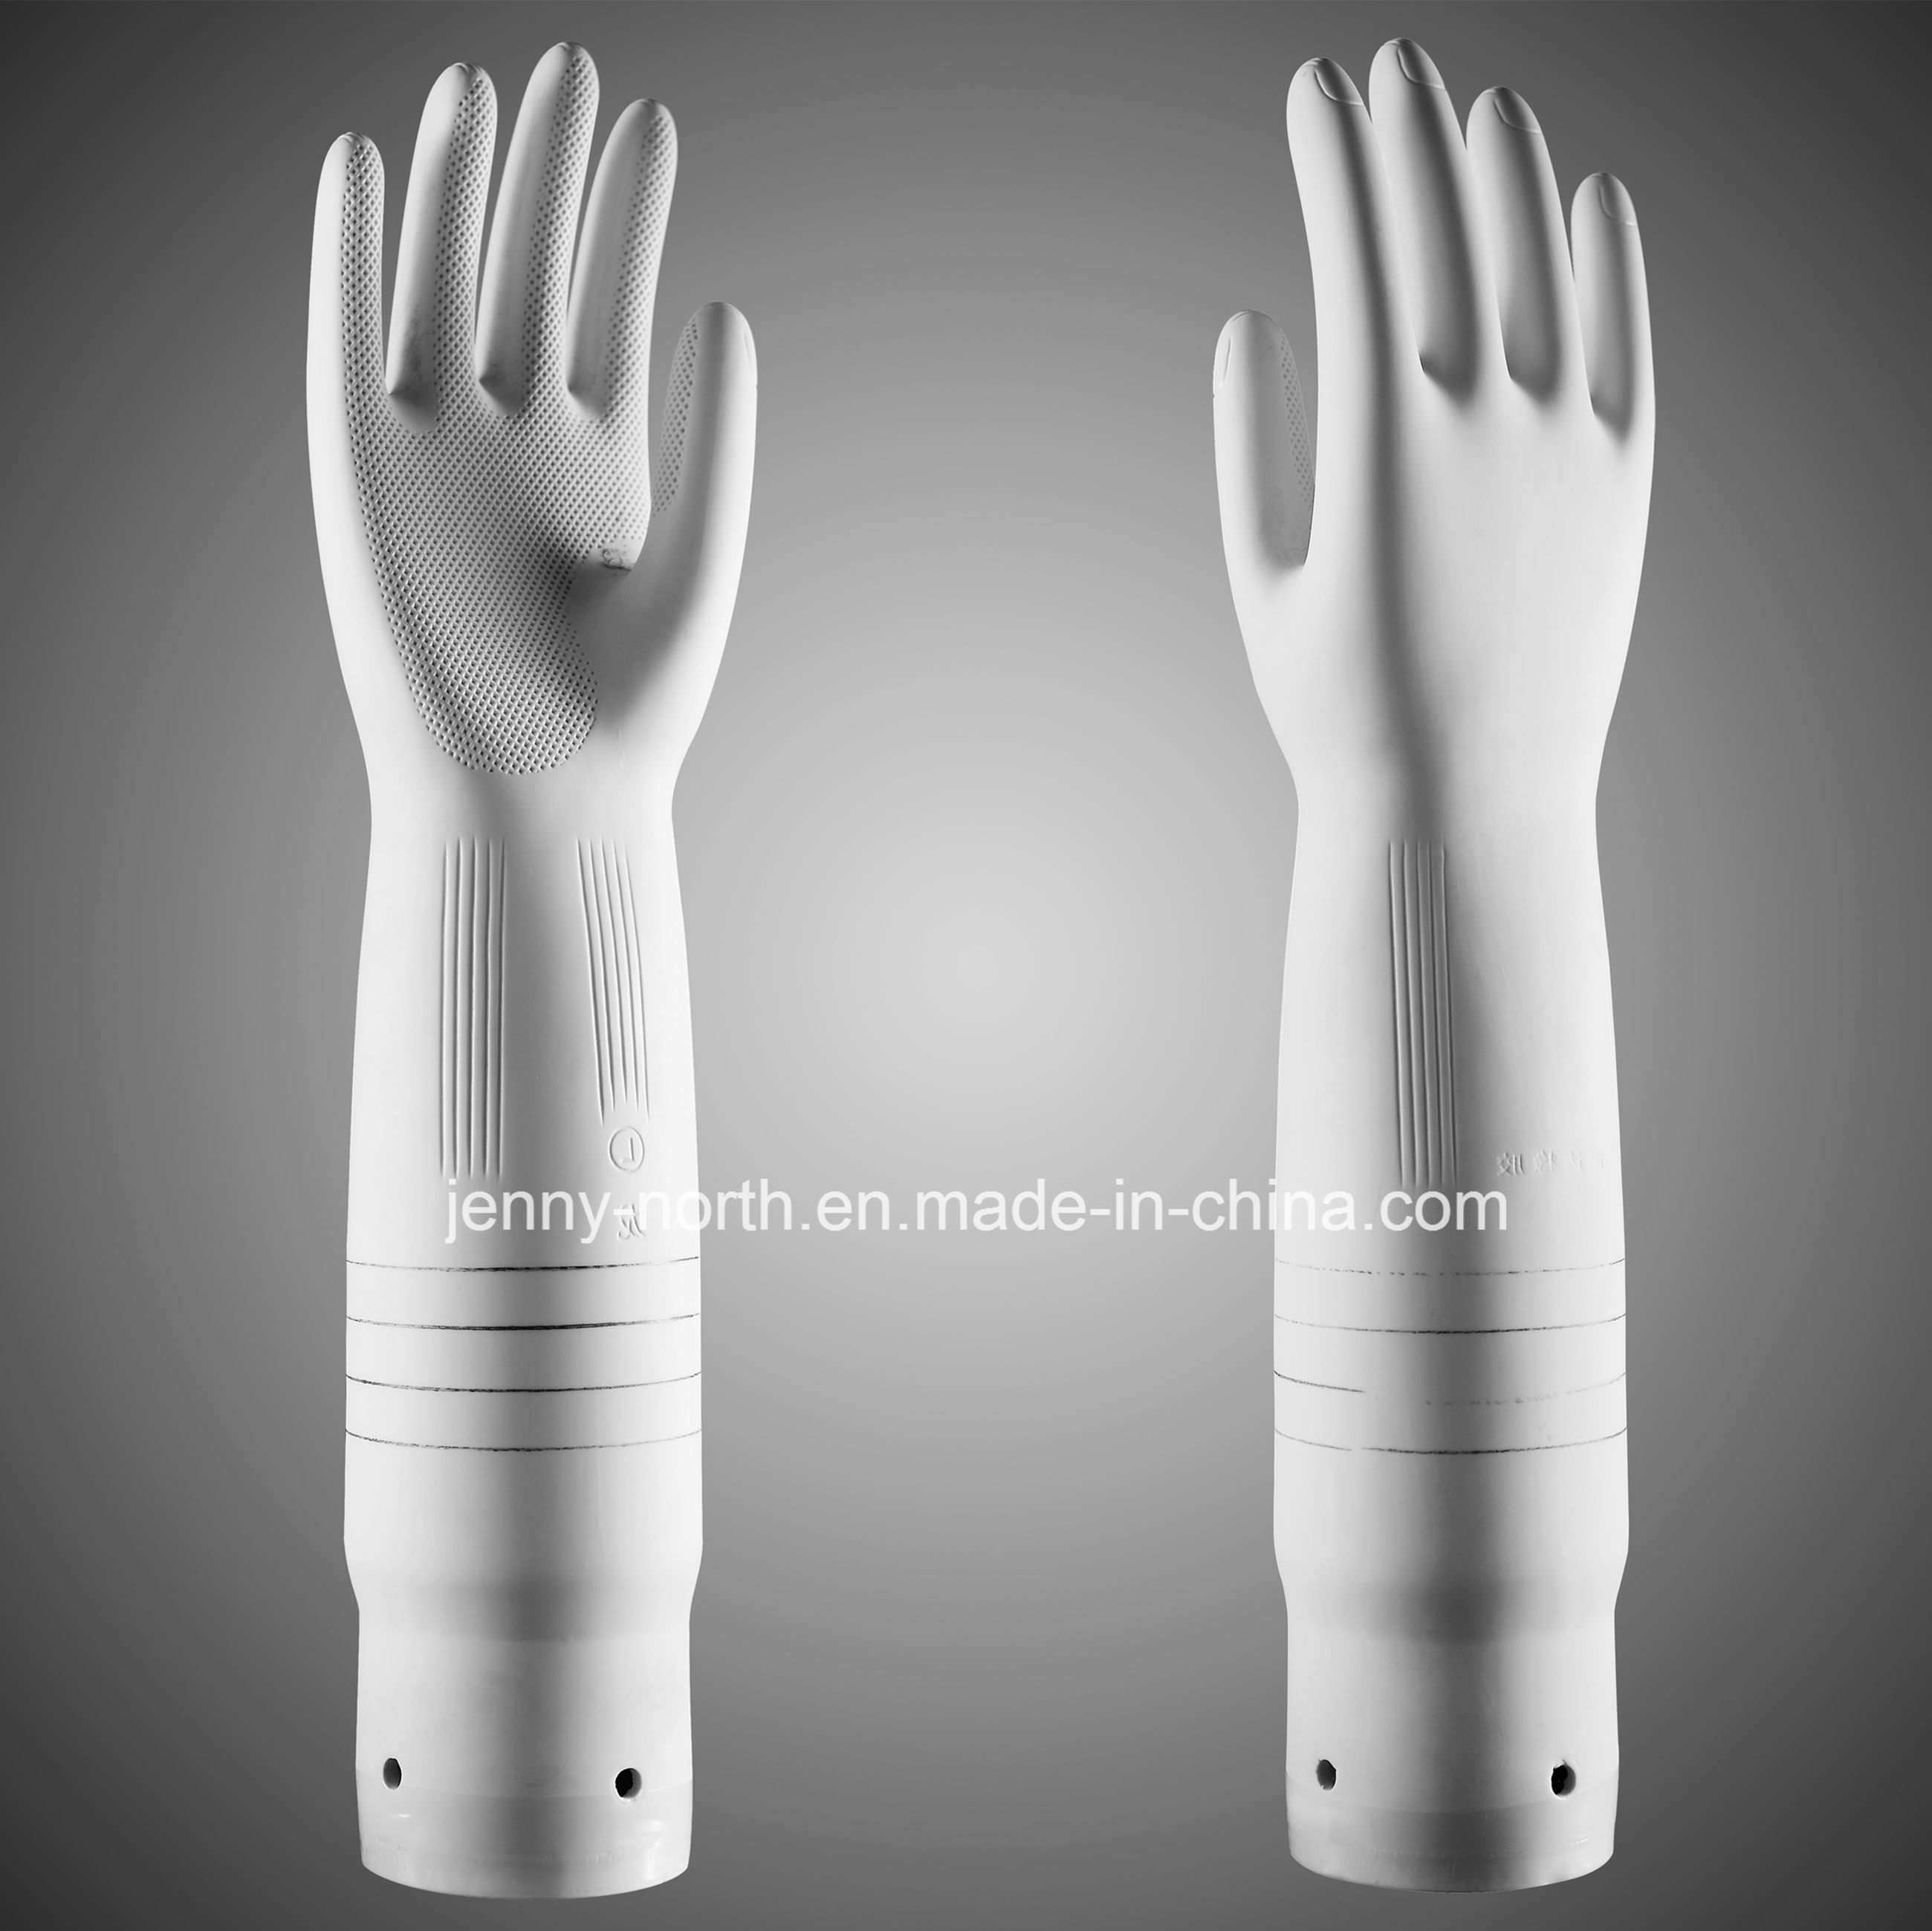 Pattern Ceramic Former for Industrial Gloves